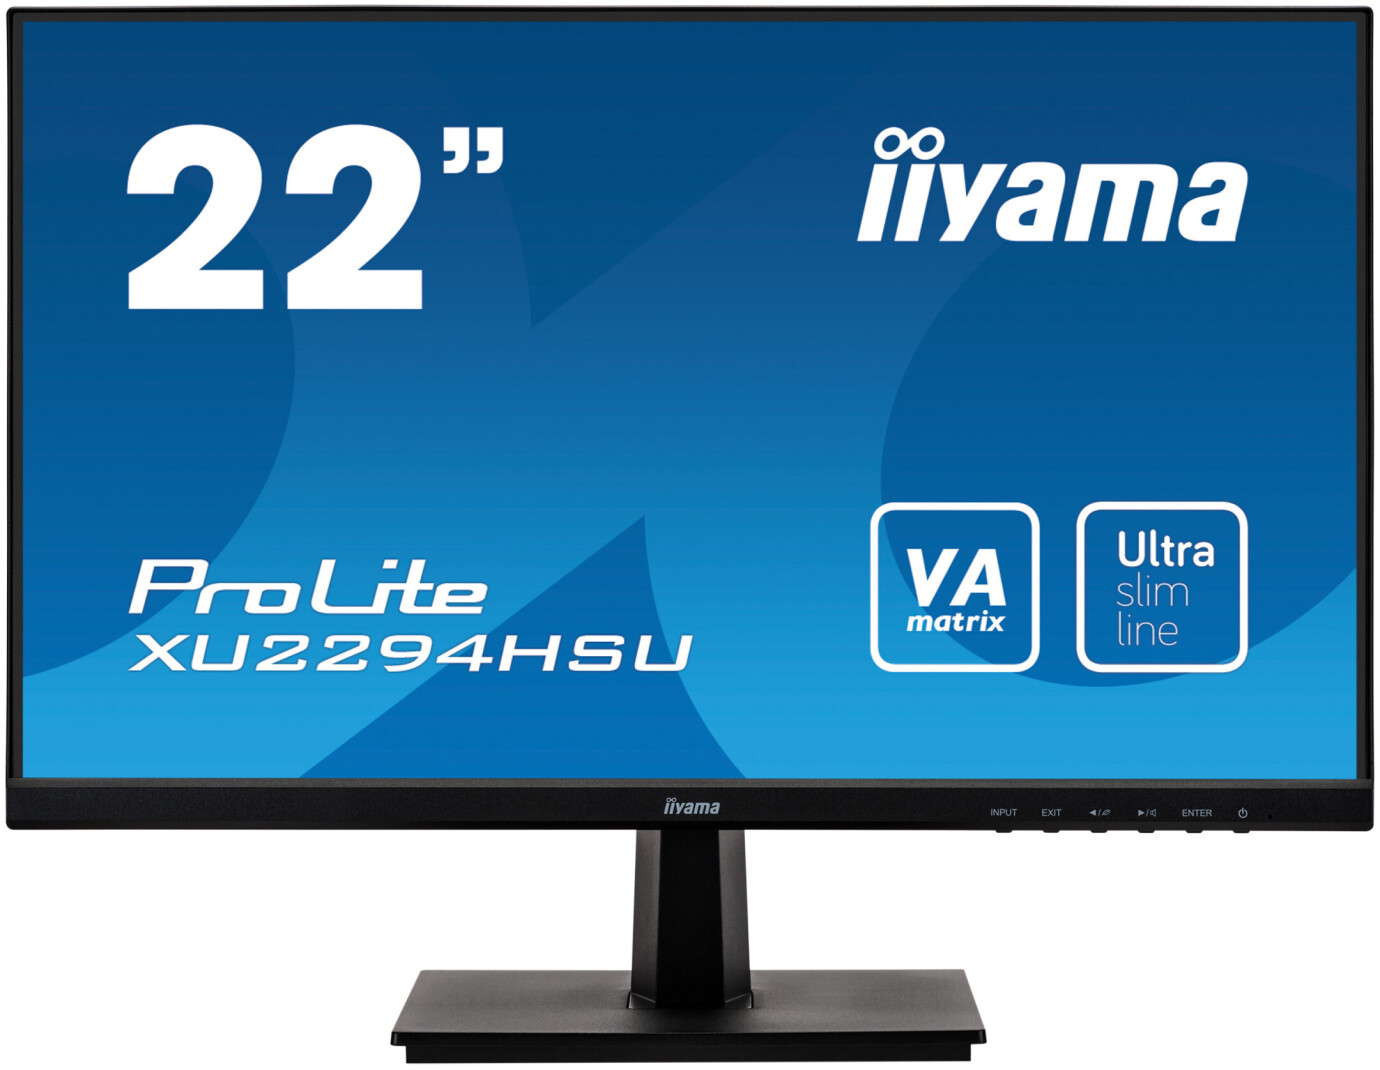 iiyama PROLITE XU2294HSU-B1 22'' Businessmonitor mit 4ms und Full HD - Demo